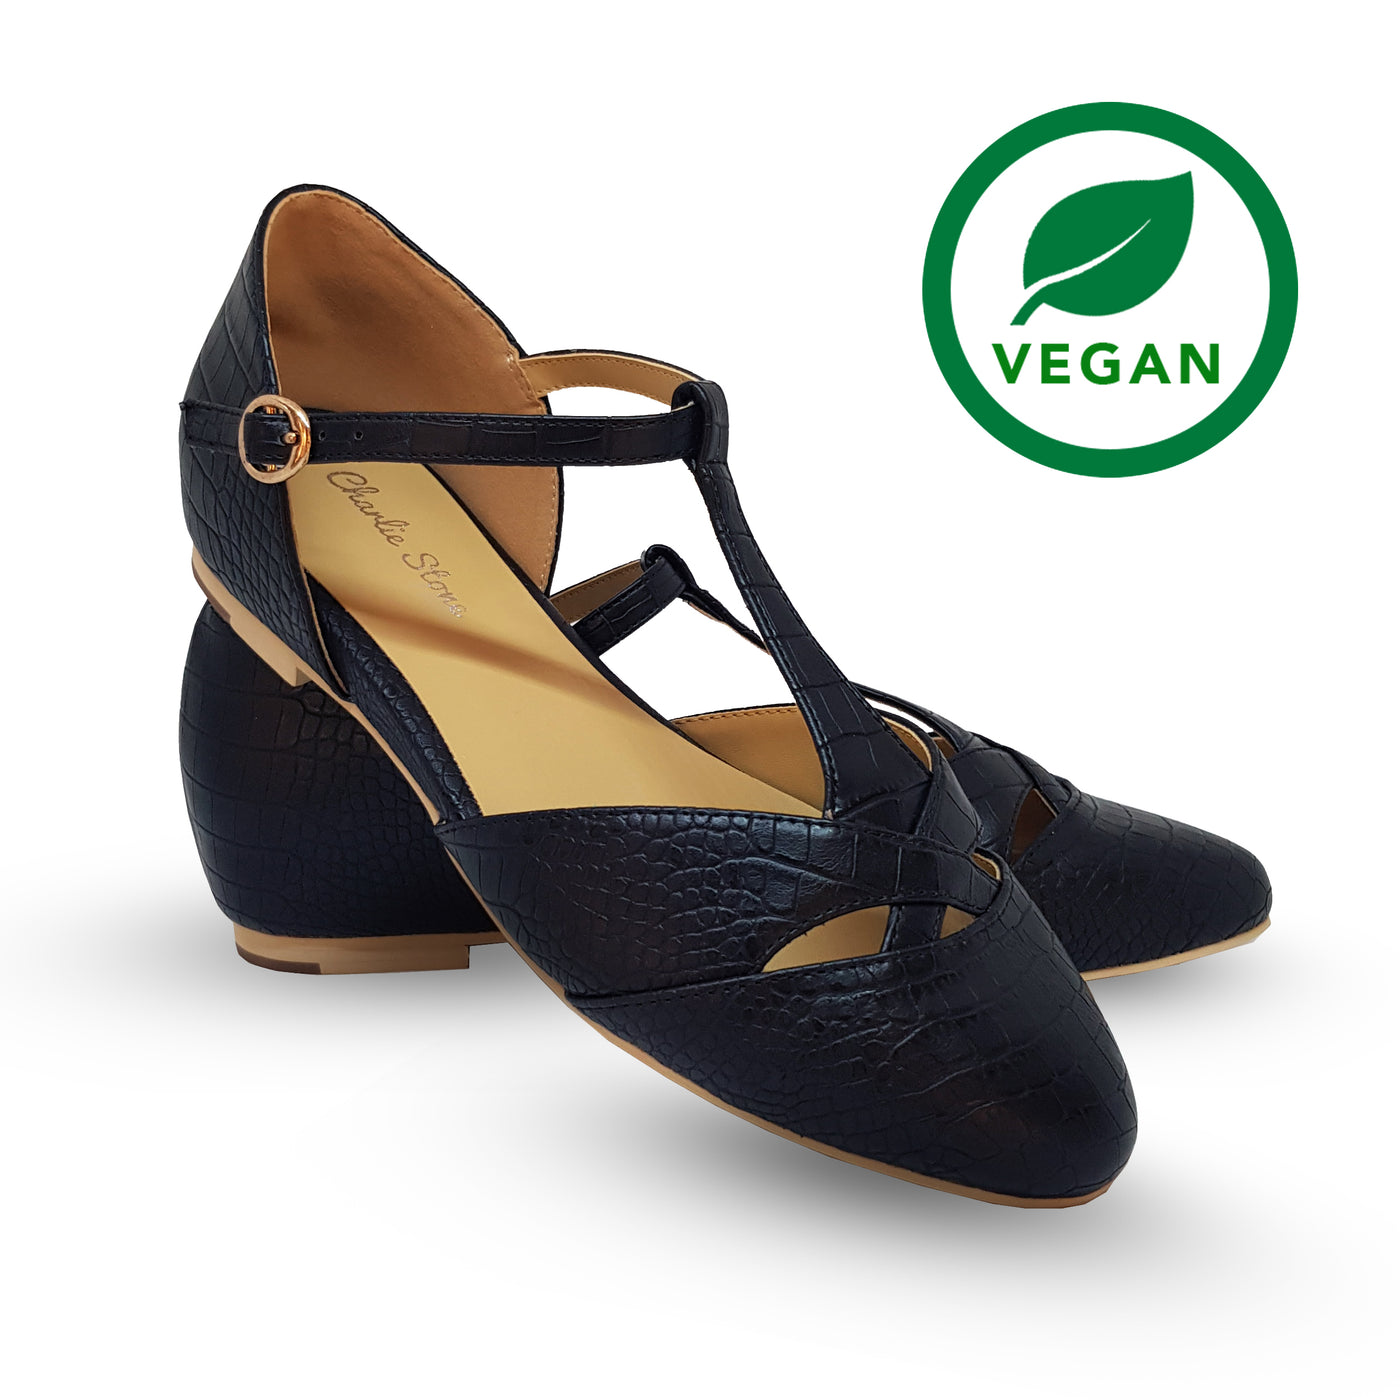 Charlie Stone Vintage Inspired flats Retro 1940’s 1950’s Style Ladies Shoes black vegan